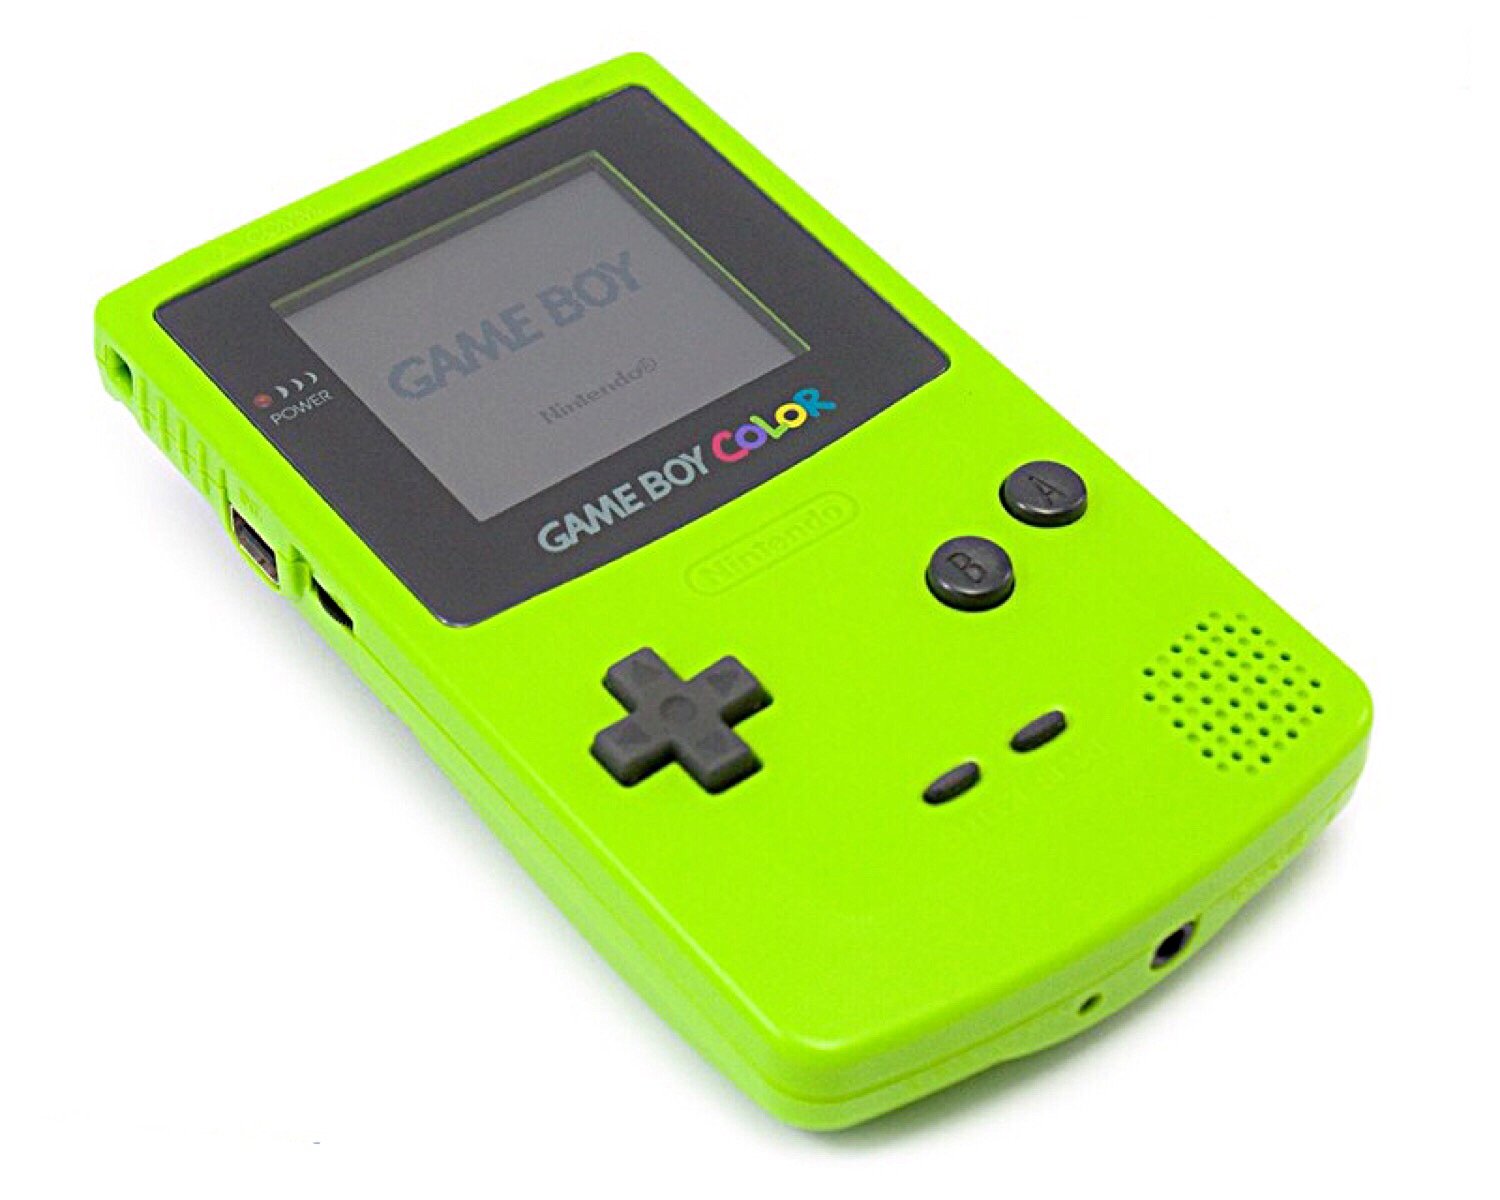 Year 2000 relics - game boy color - Game Boy Power Mindendo Game Boy Color Co